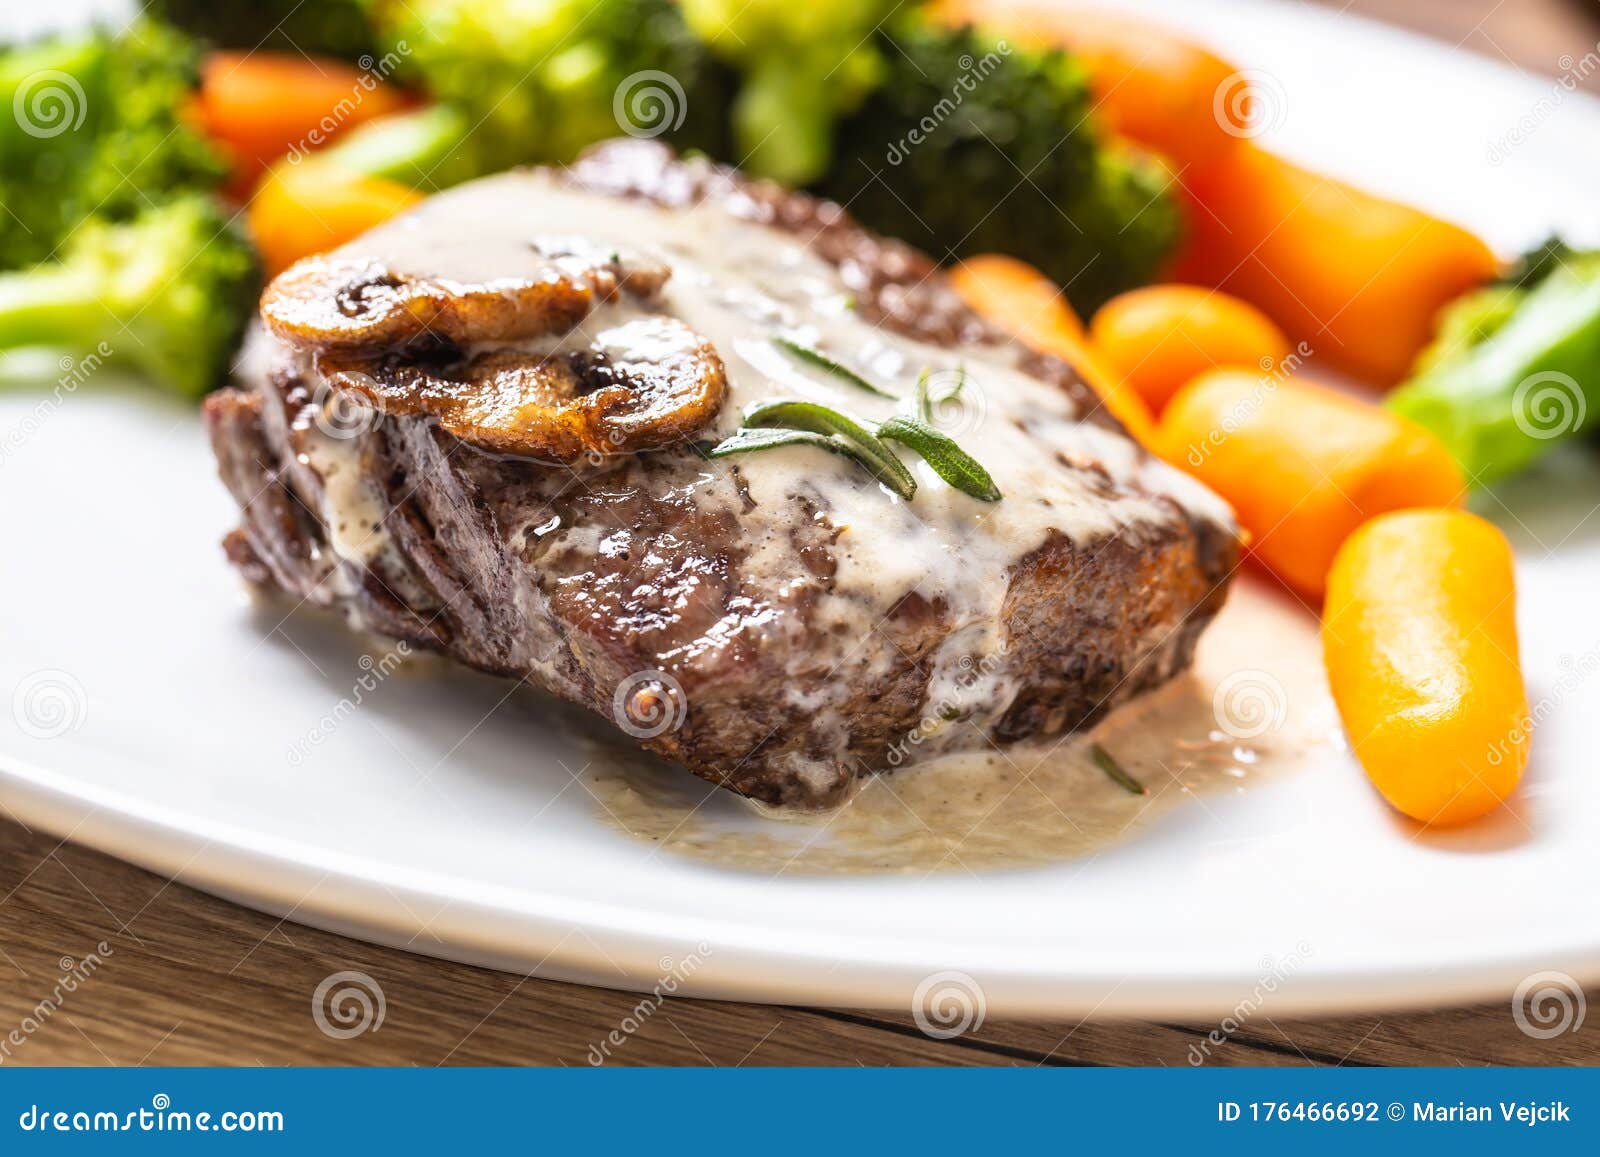 Ribeye Steak With Mushroom Gravy - Rib Eye Steak With Mushroom And Wild Blueberry Sauce Bonne Maman - In the same skillet, saute onion and mushrooms until tender.